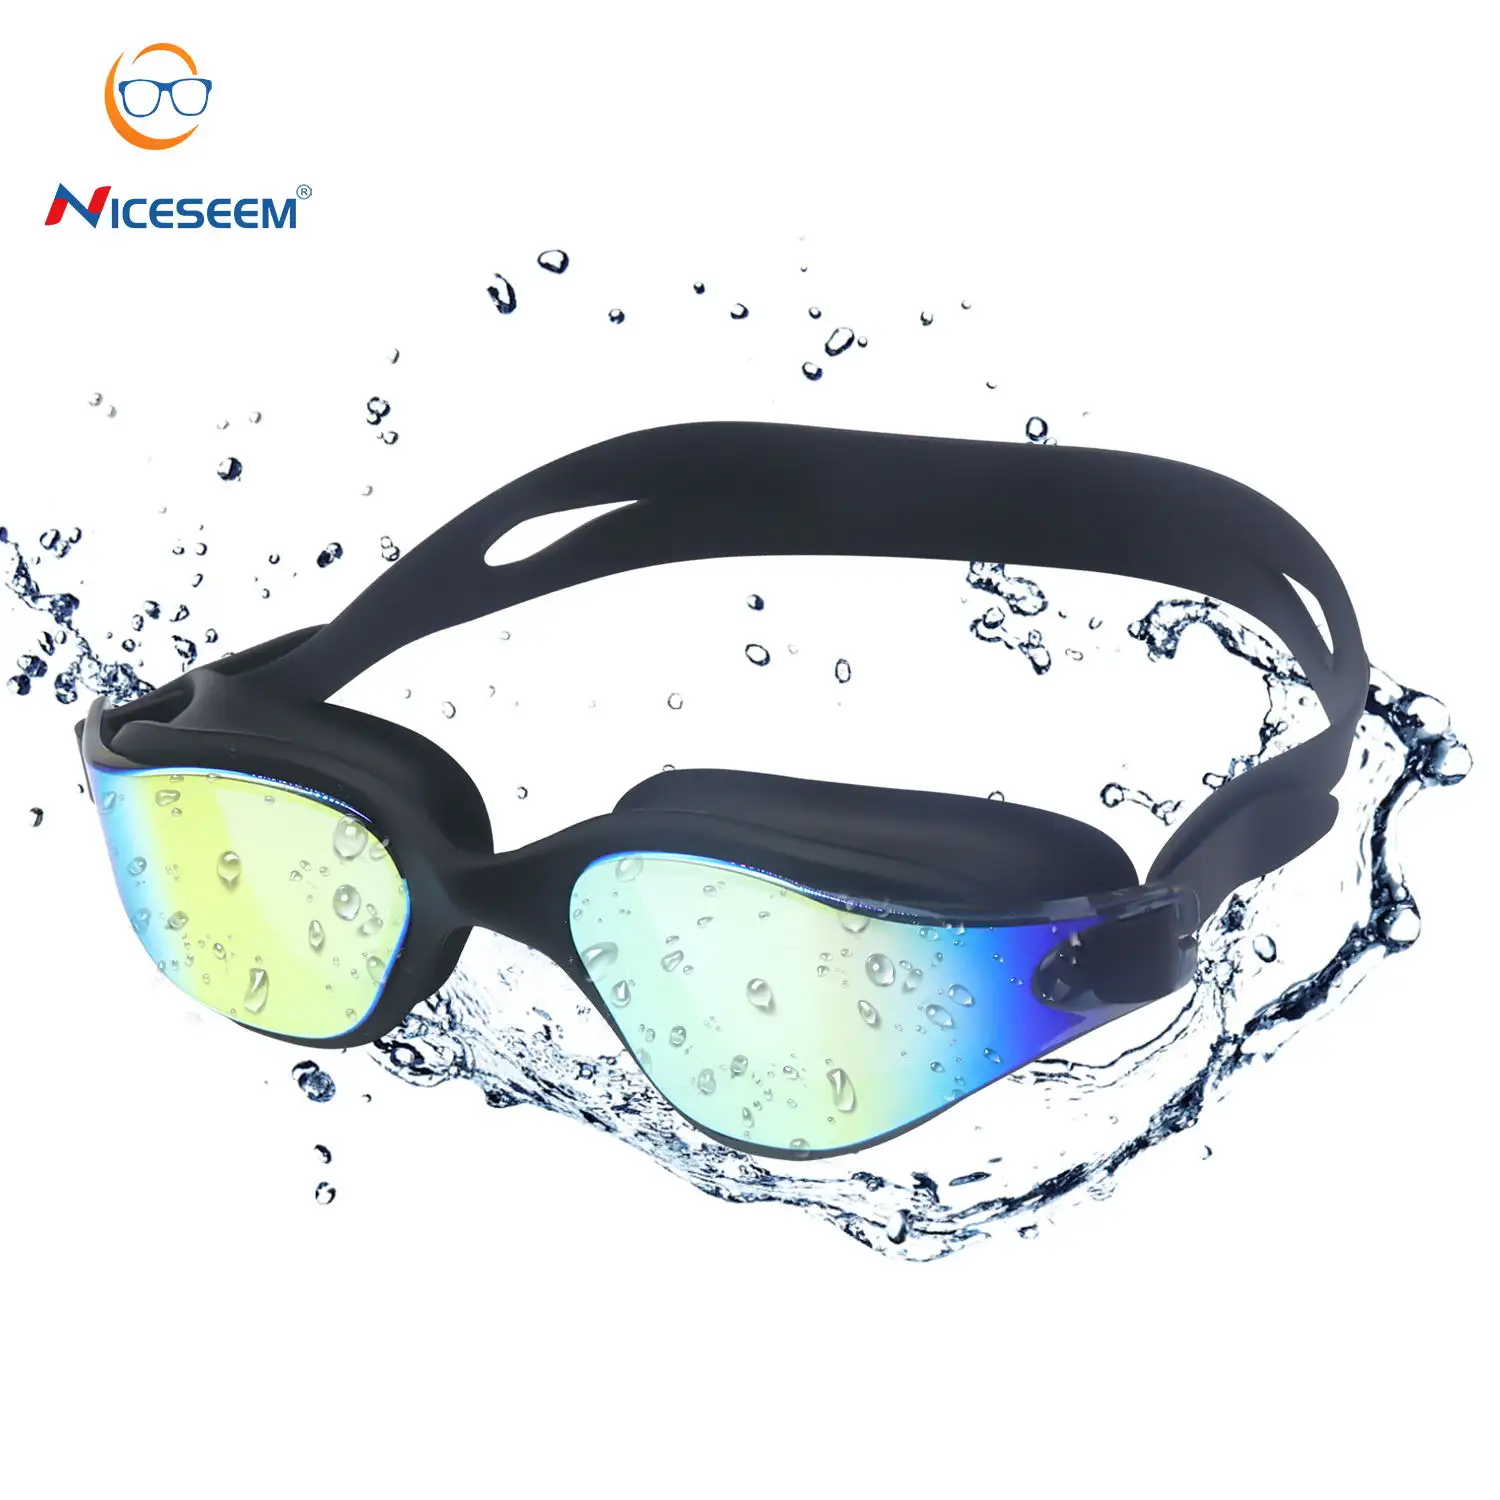 Kacamata renang balap terbaik untuk dewasa, kacamata renang Triathlon cermin luar ruangan air terbuka